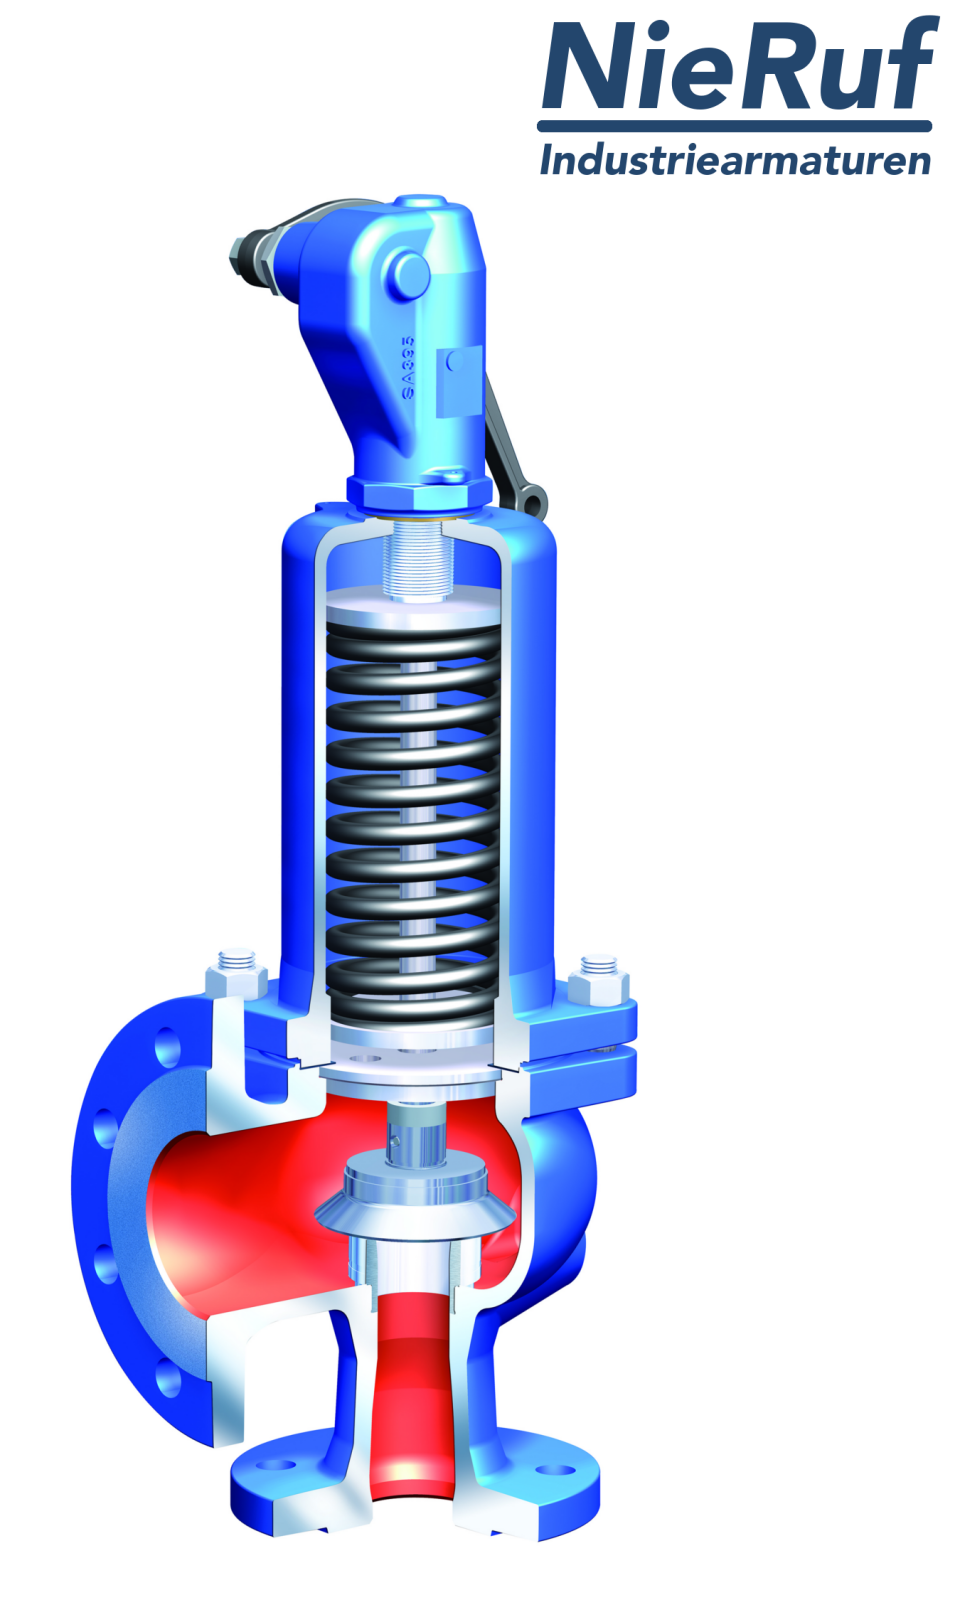 flange-safety valve DN25/DN25 SF02, cast steel 1.0619+N FPM, with lever